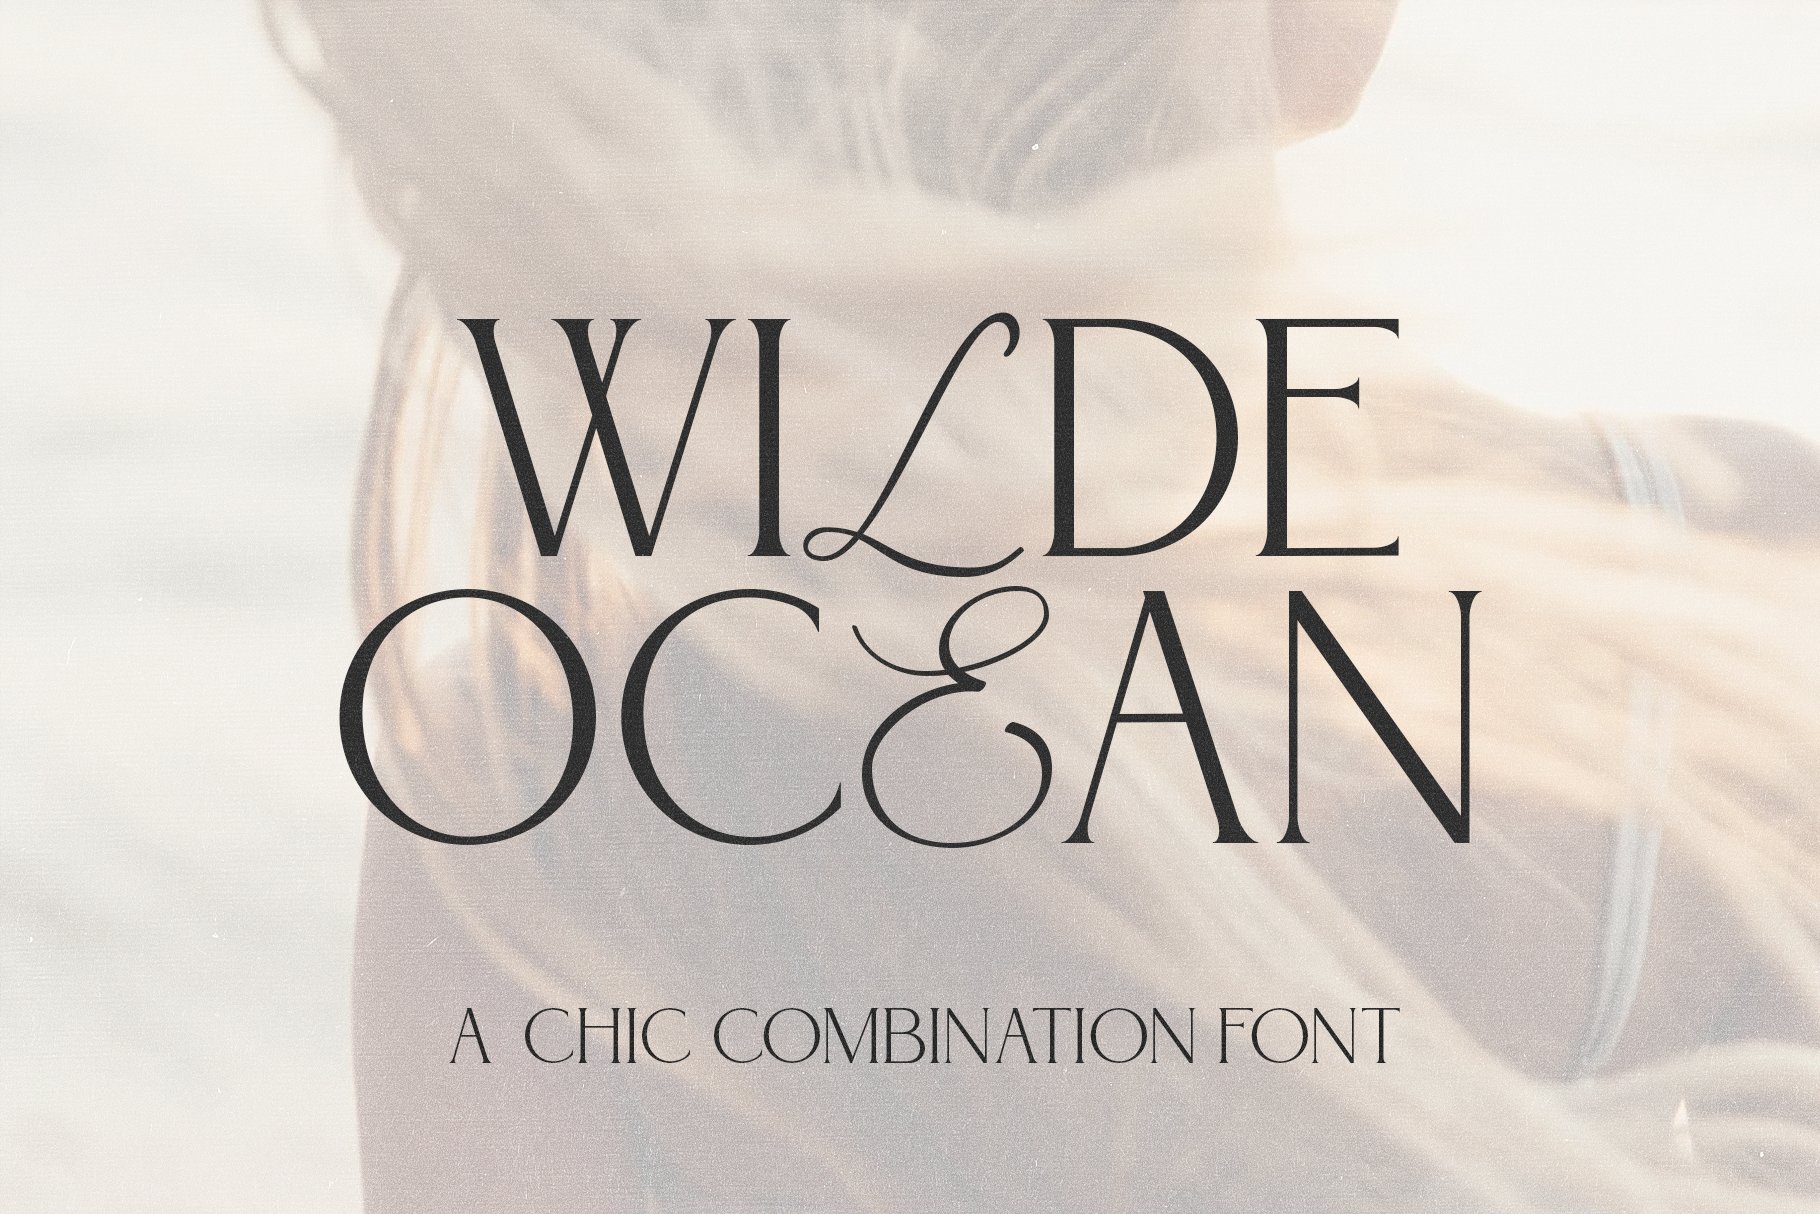 Wilde Ocean | Calligraphy Serif Font cover image.